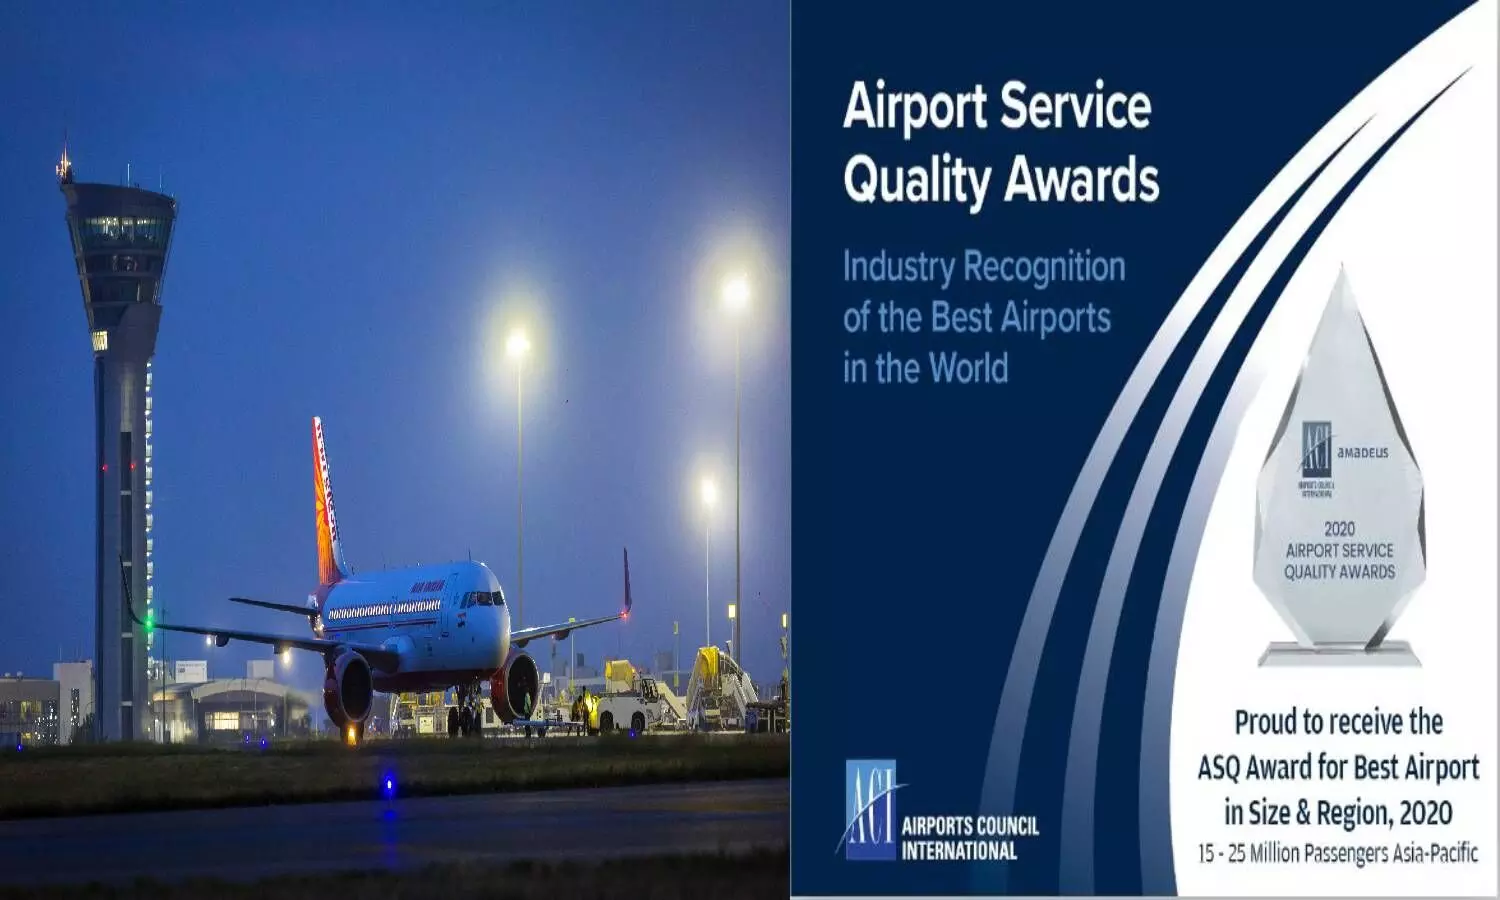 Hyderabad international airport wins ACI ASQ best airport award for 2020